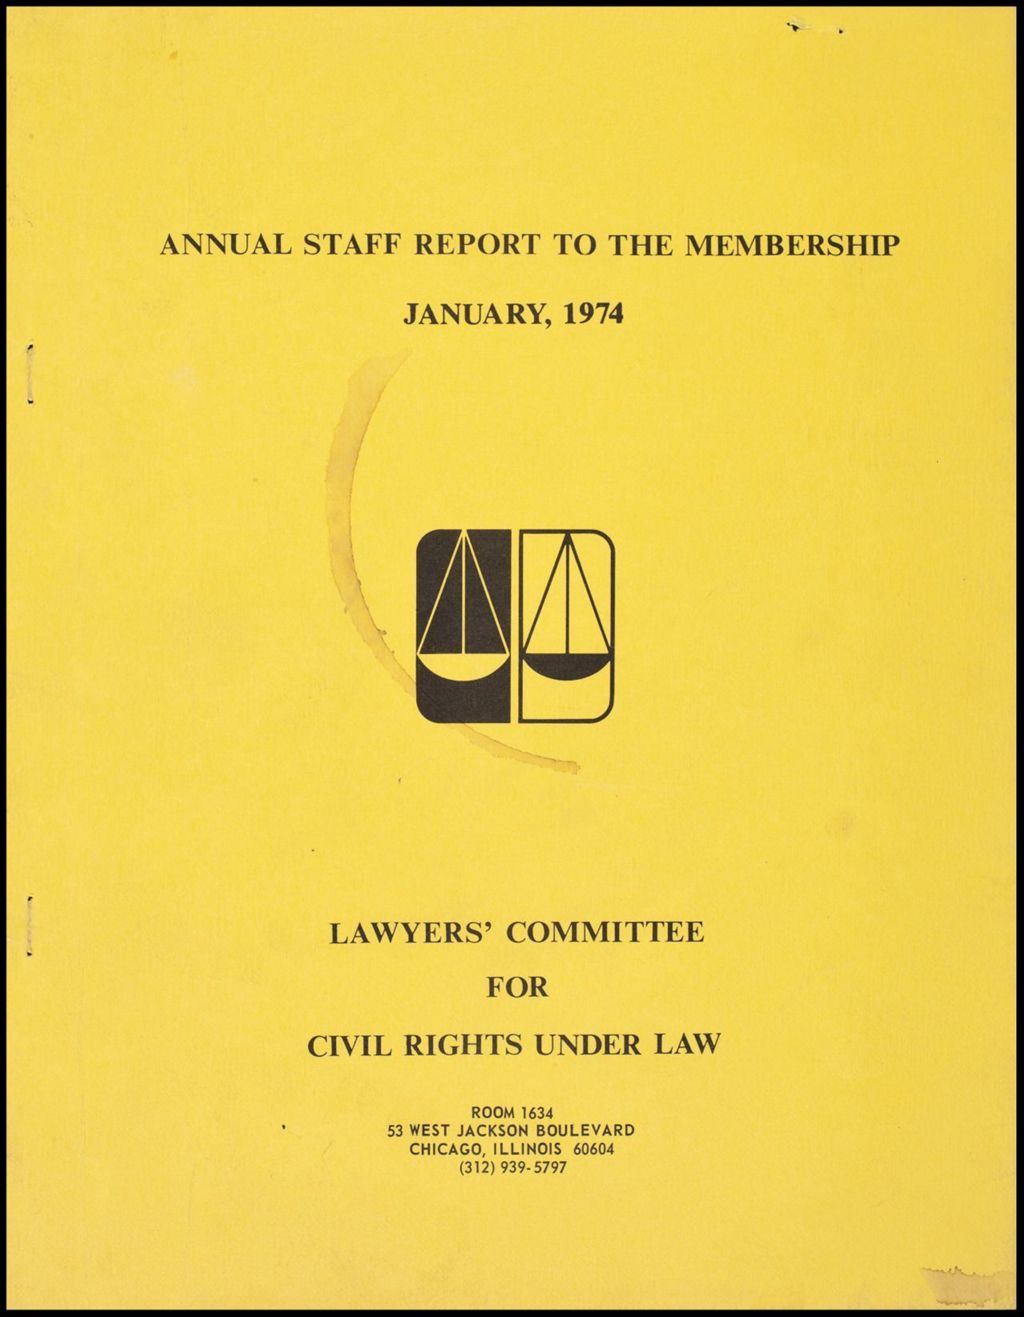 State of Illinois Affirmative Action Program, 1975 (Folder III-2944)